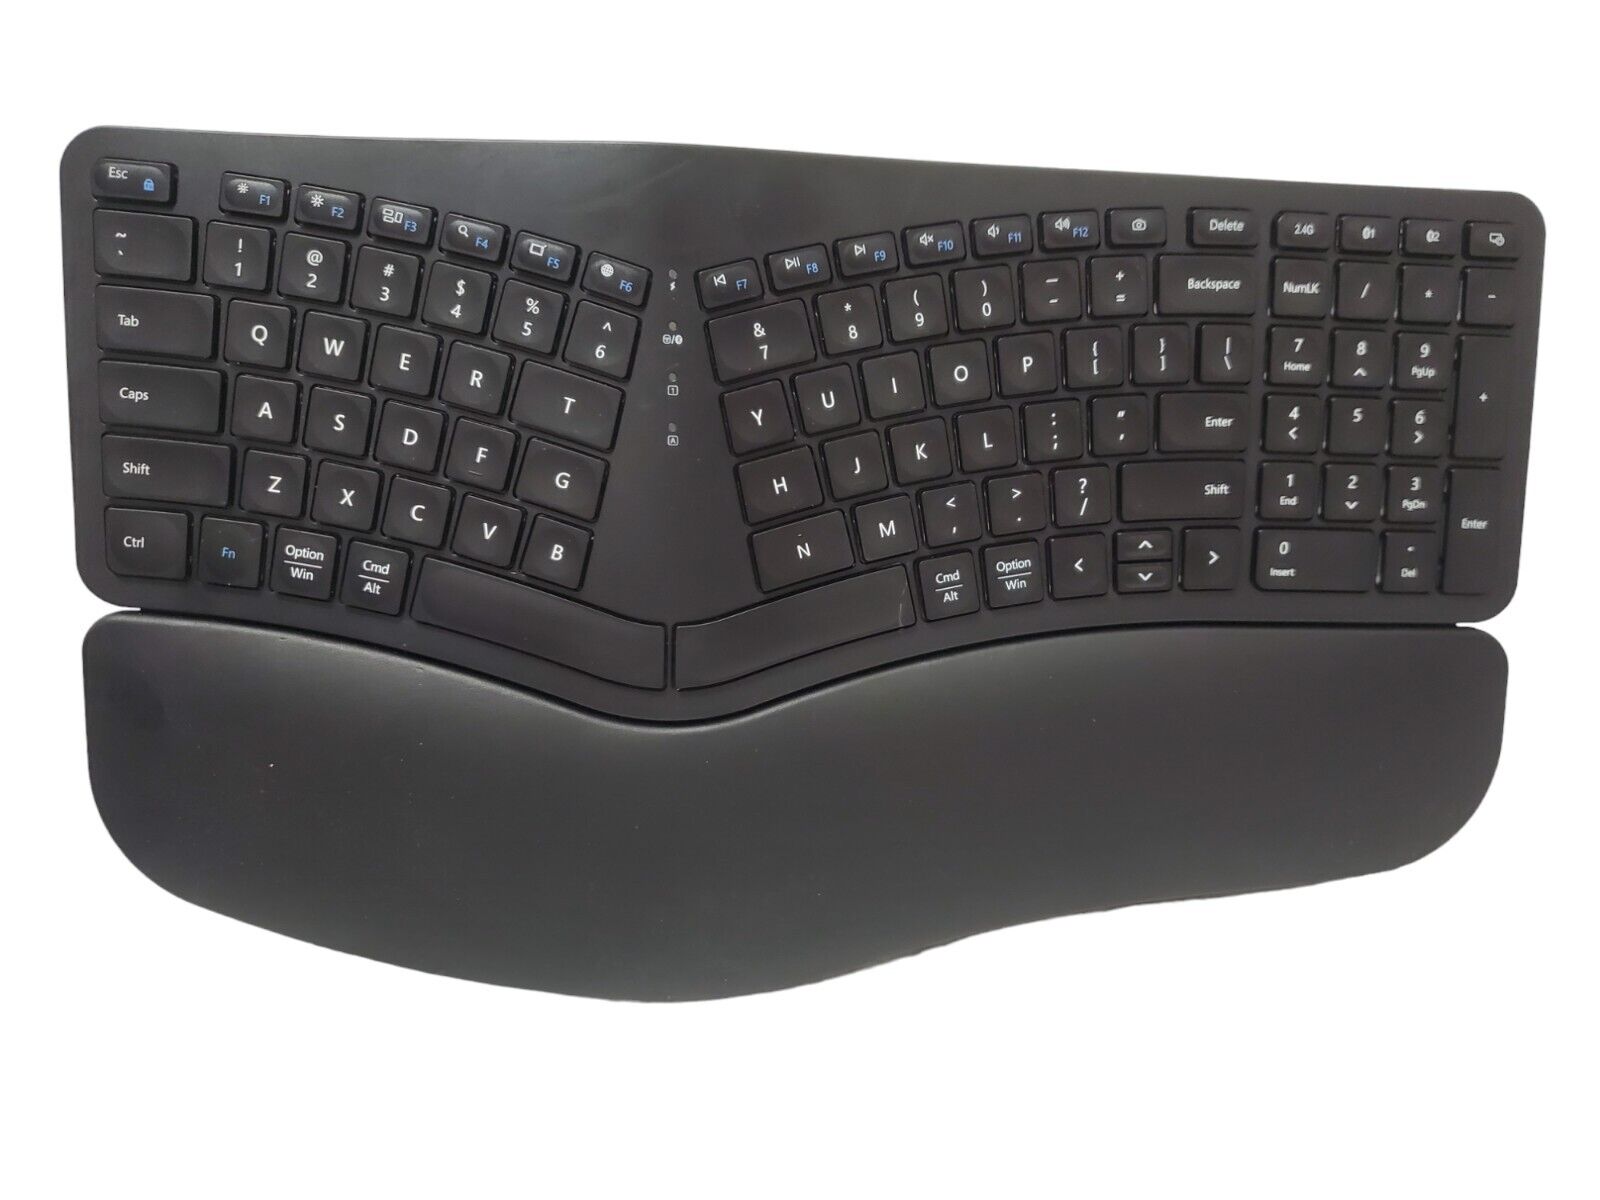 Loigys MK960 Ergonomic Wireless Keyboard ONLY, Bluetooth/2.4G